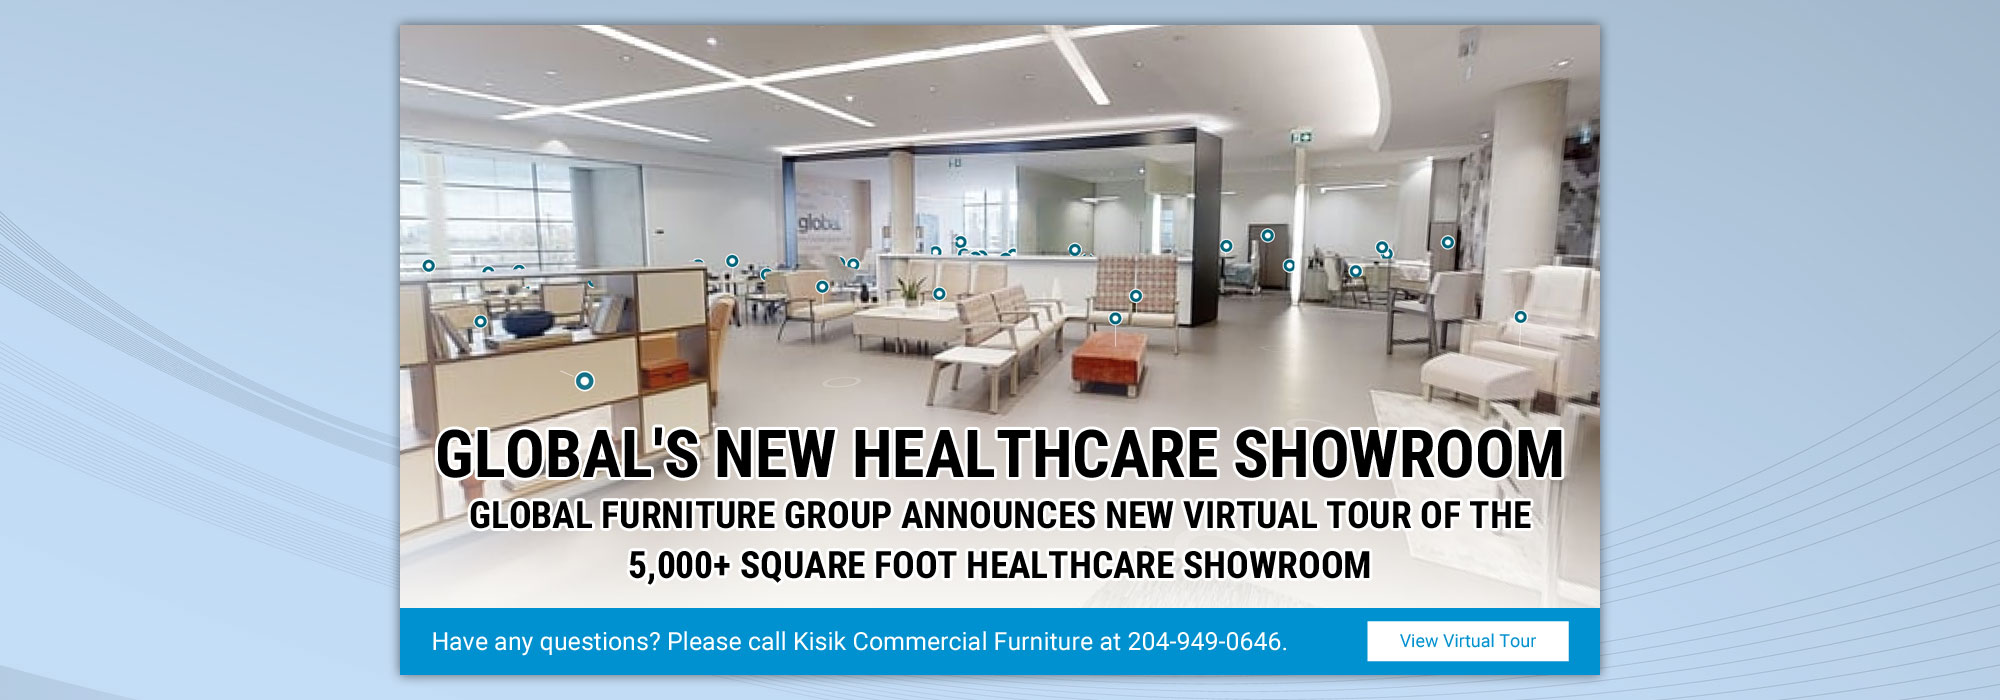 Global's New Healthcare Showroom